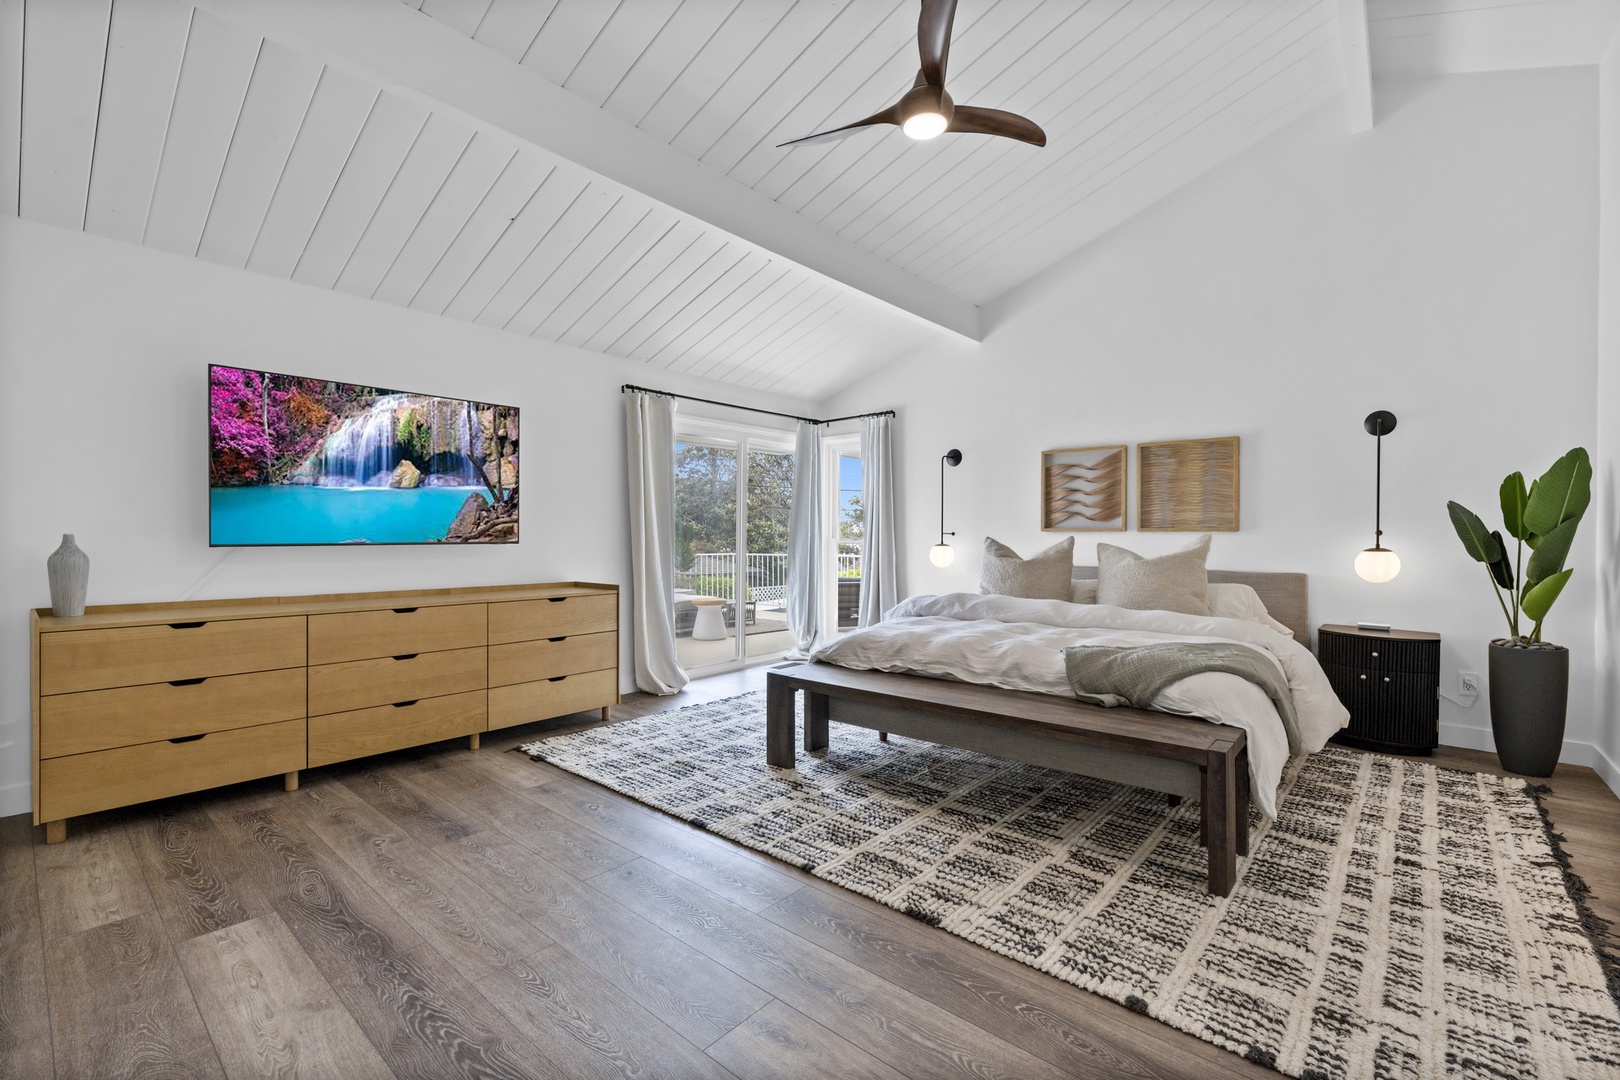 Primary Suite: King Bed, ensuite bath, flat panel TV & views